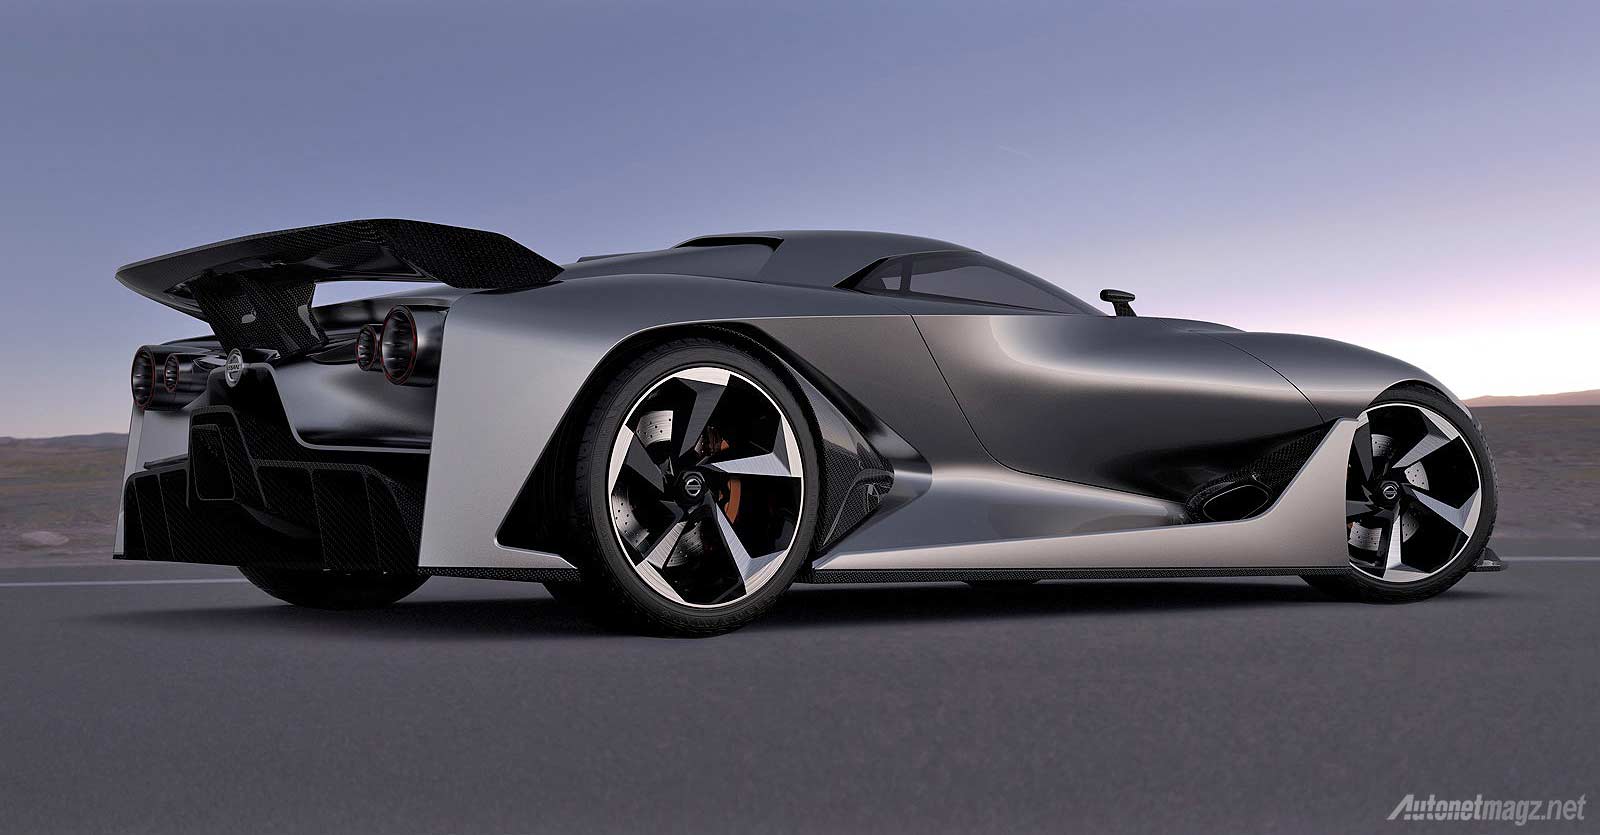 International, Supercars Nissan Concept 2020: Nissan Concept 2020 Vision Gran Turismo, Apakah ini GT-R Masa Depan?